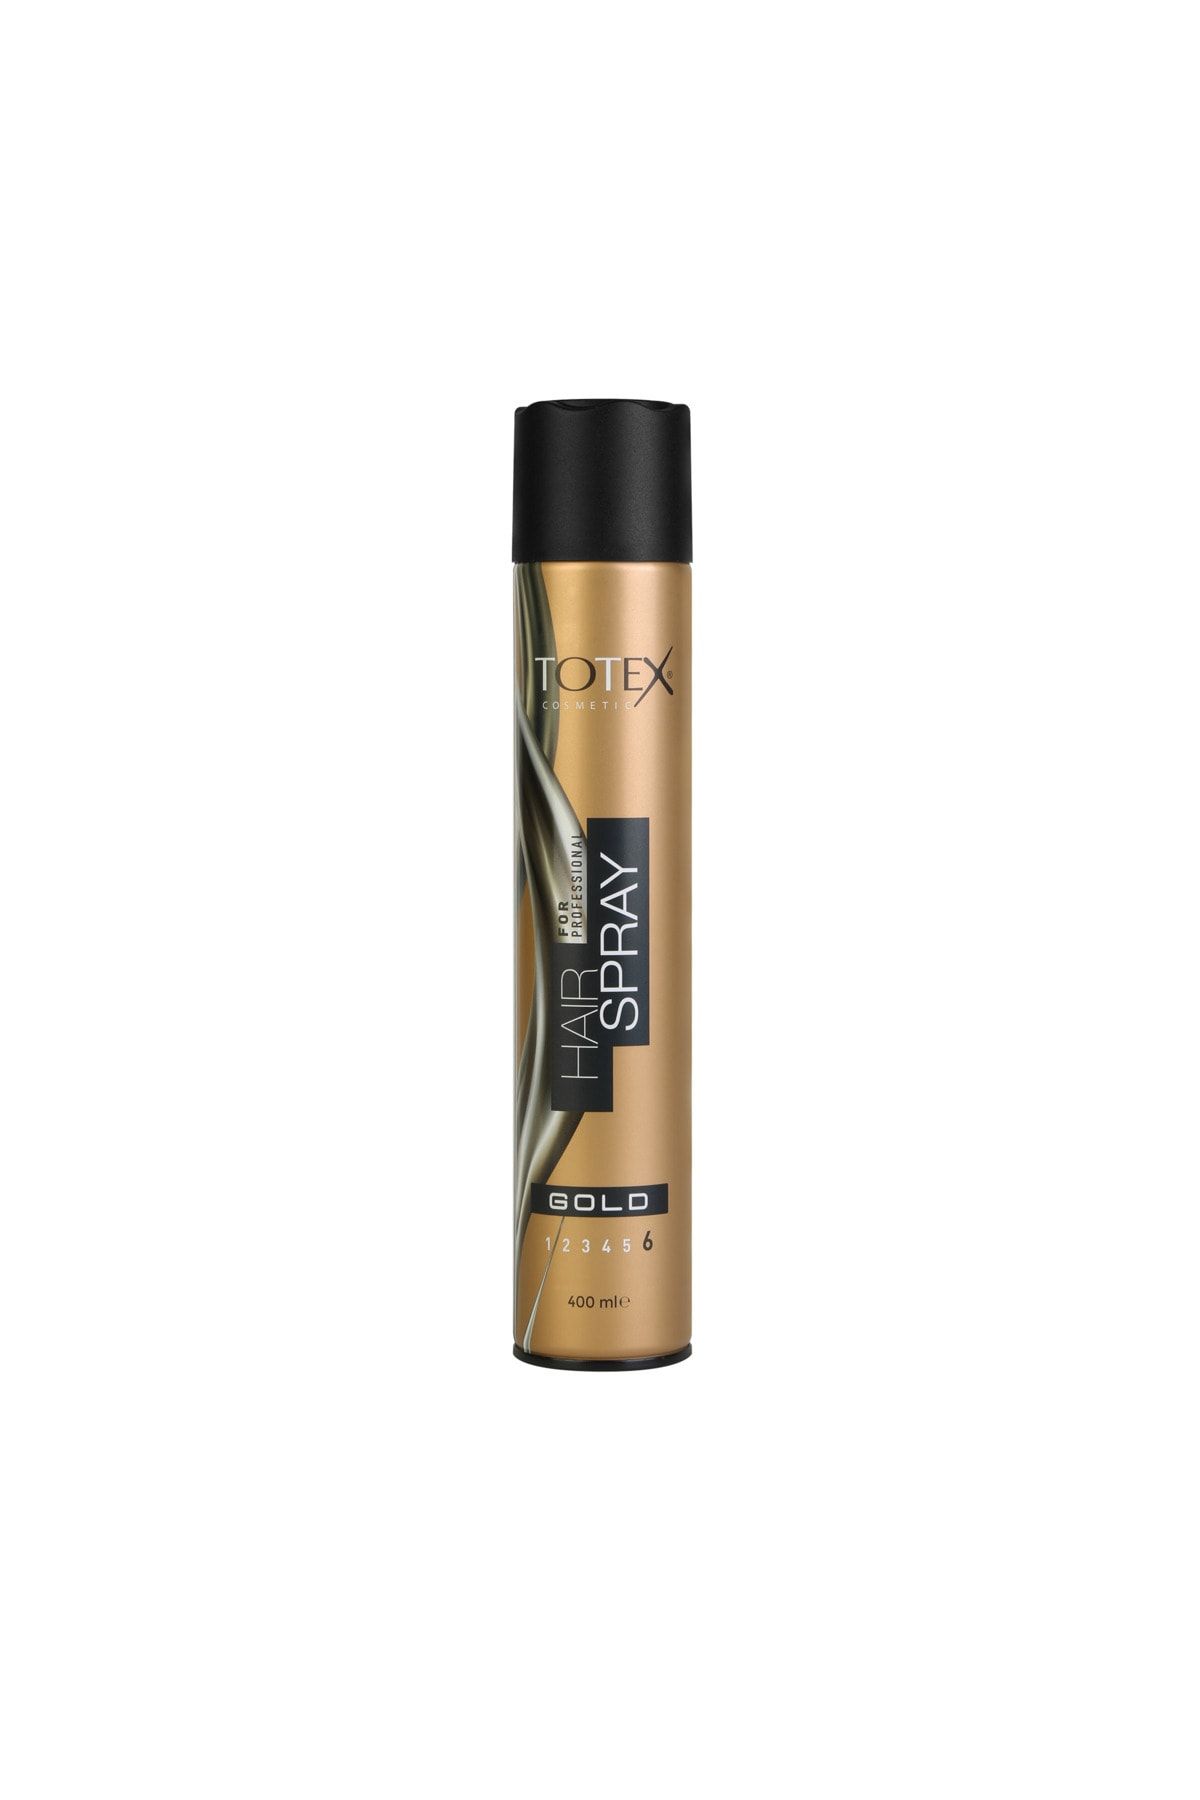 TOTEX Hair Spray Gold Saç Spreyi 400 Ml